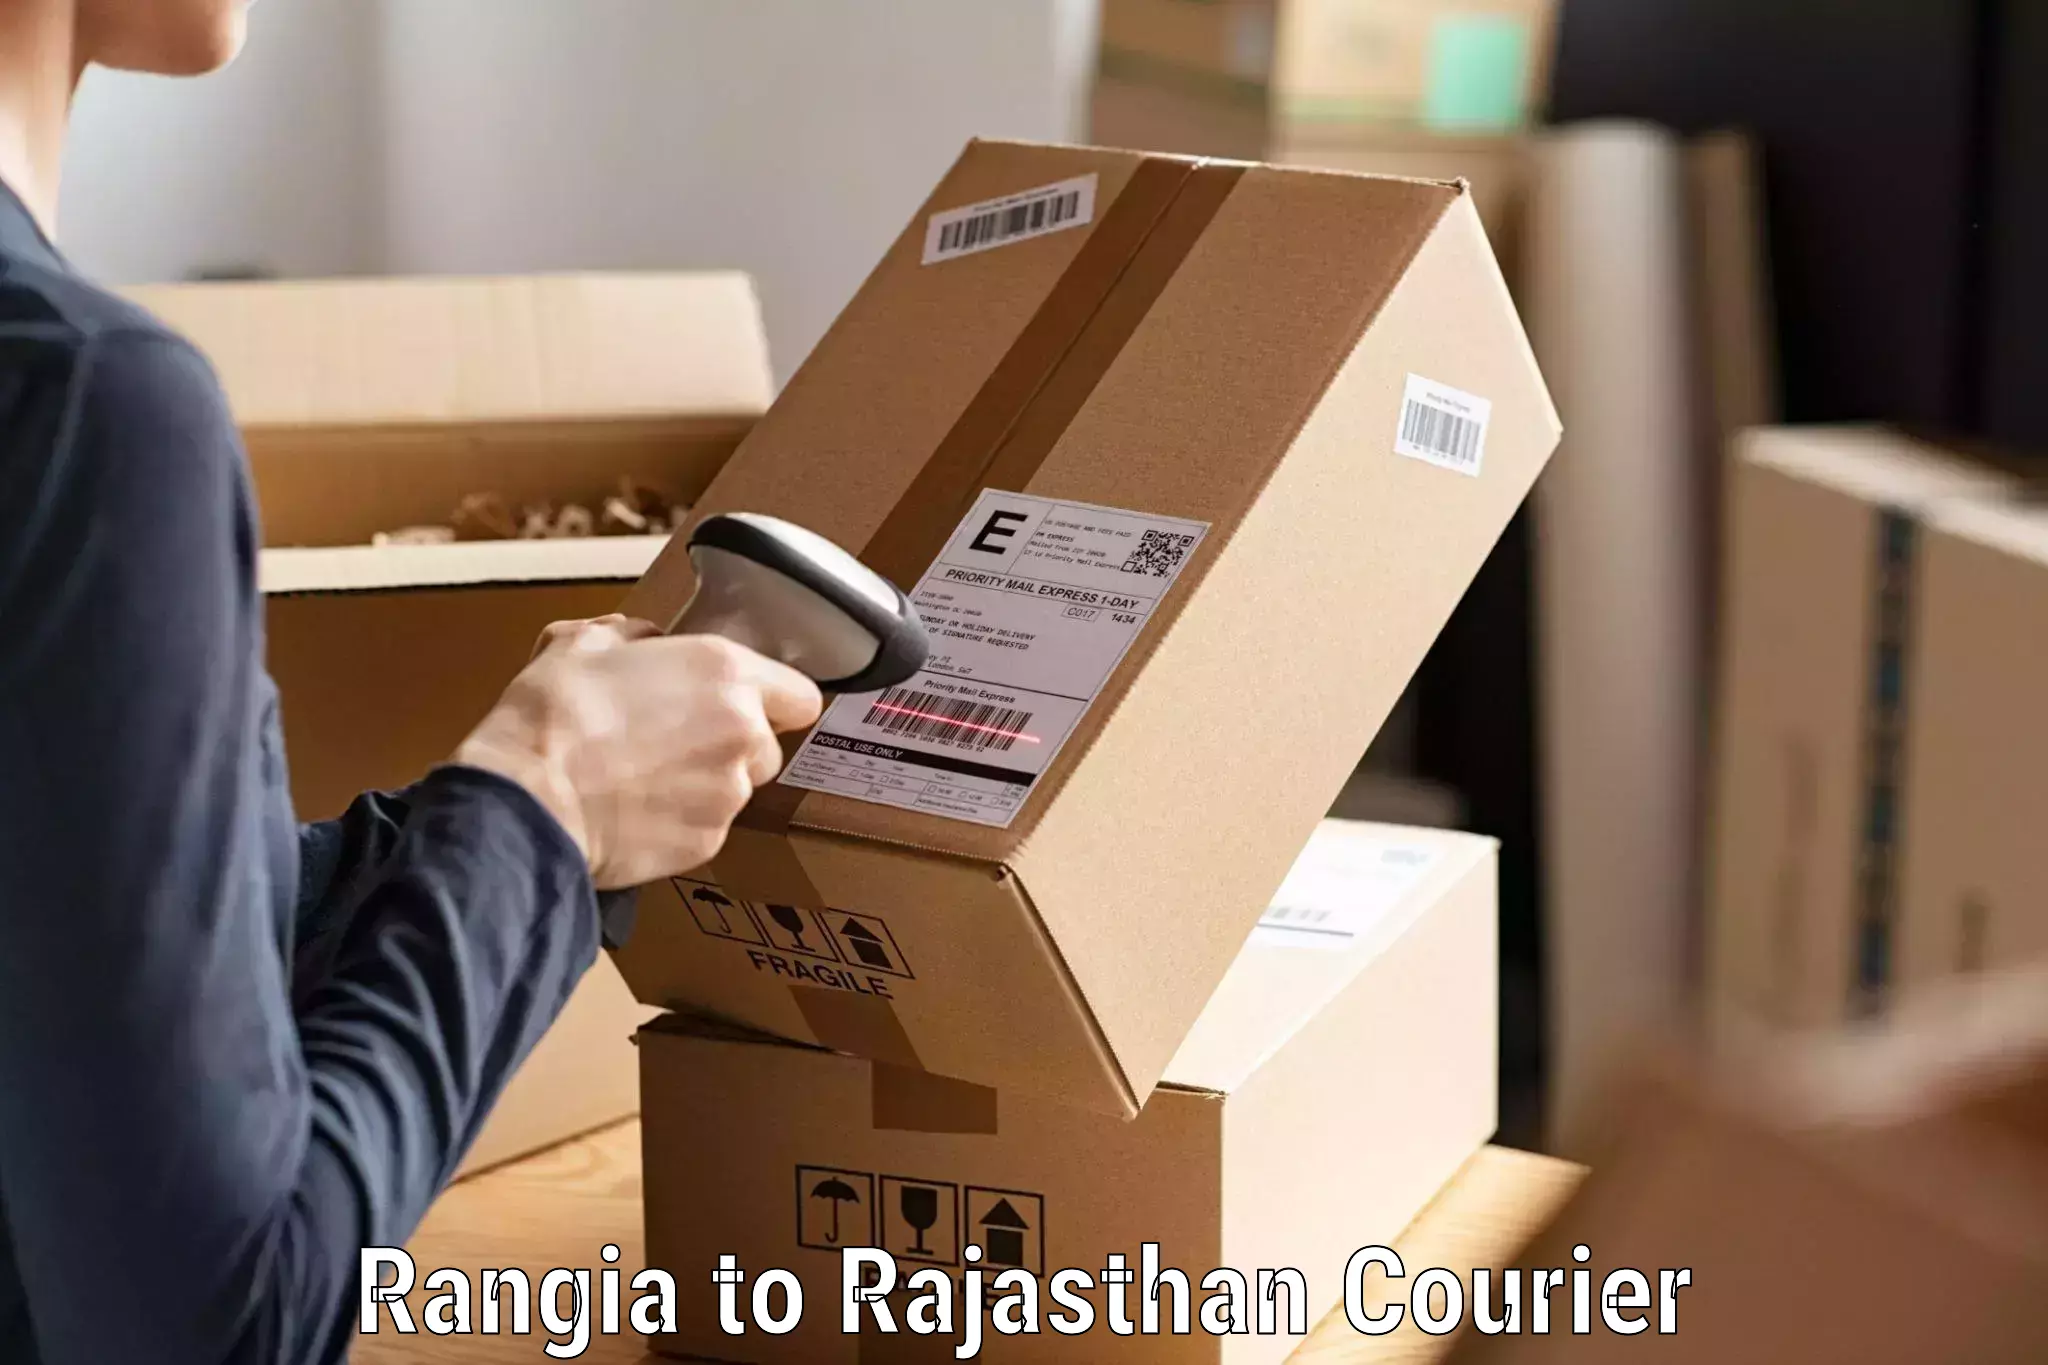 Parcel service for businesses Rangia to Nagar